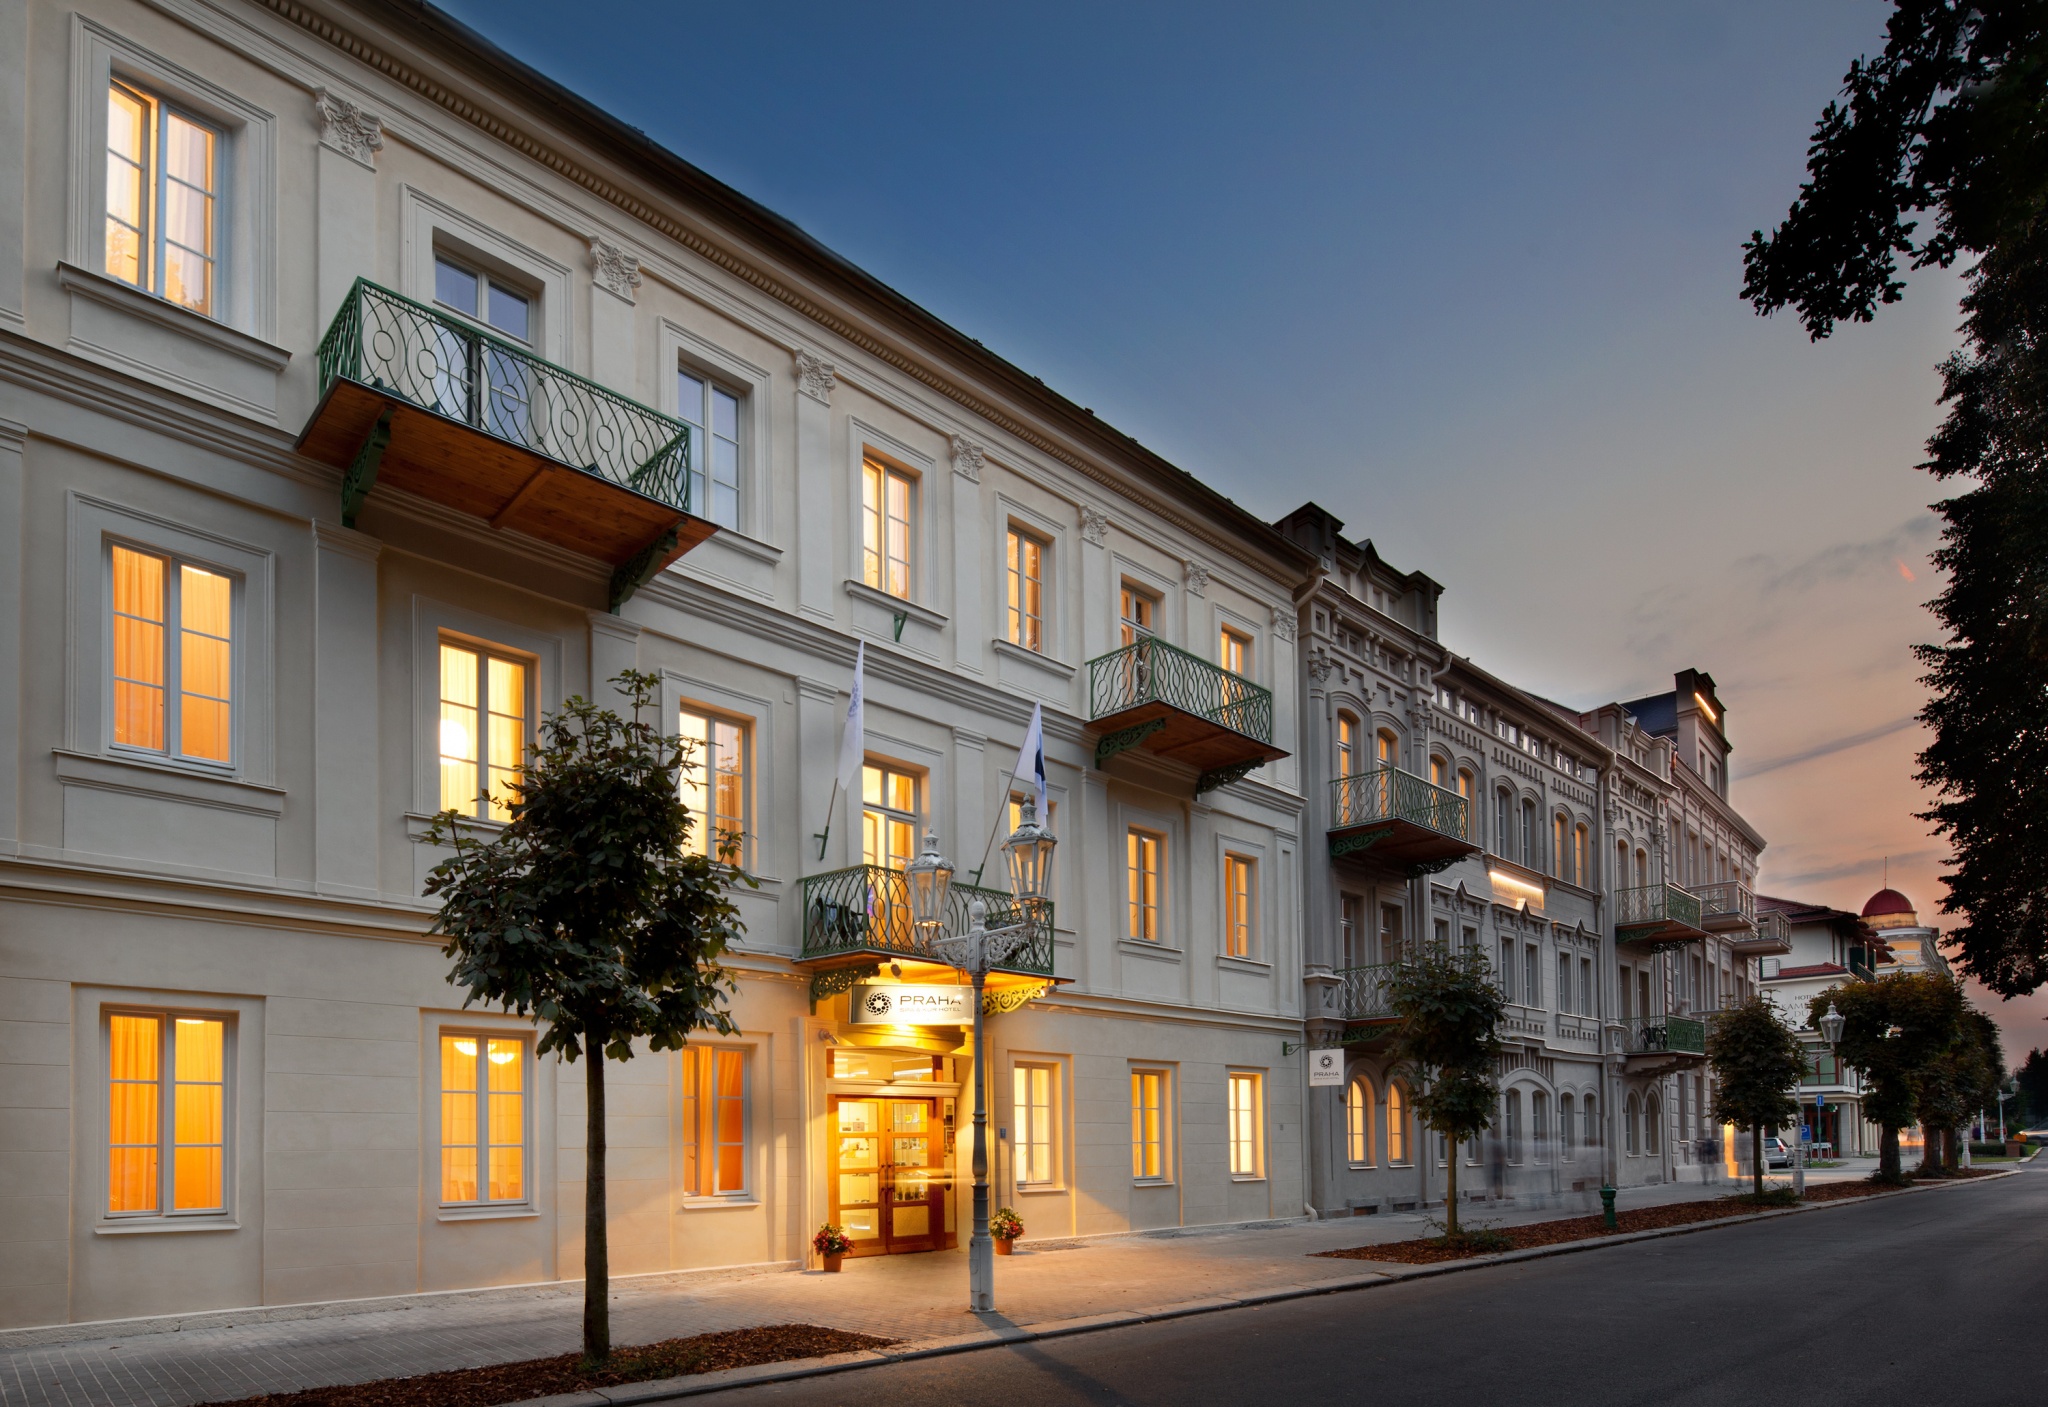 Hotel Praha, Františkovy Lázně